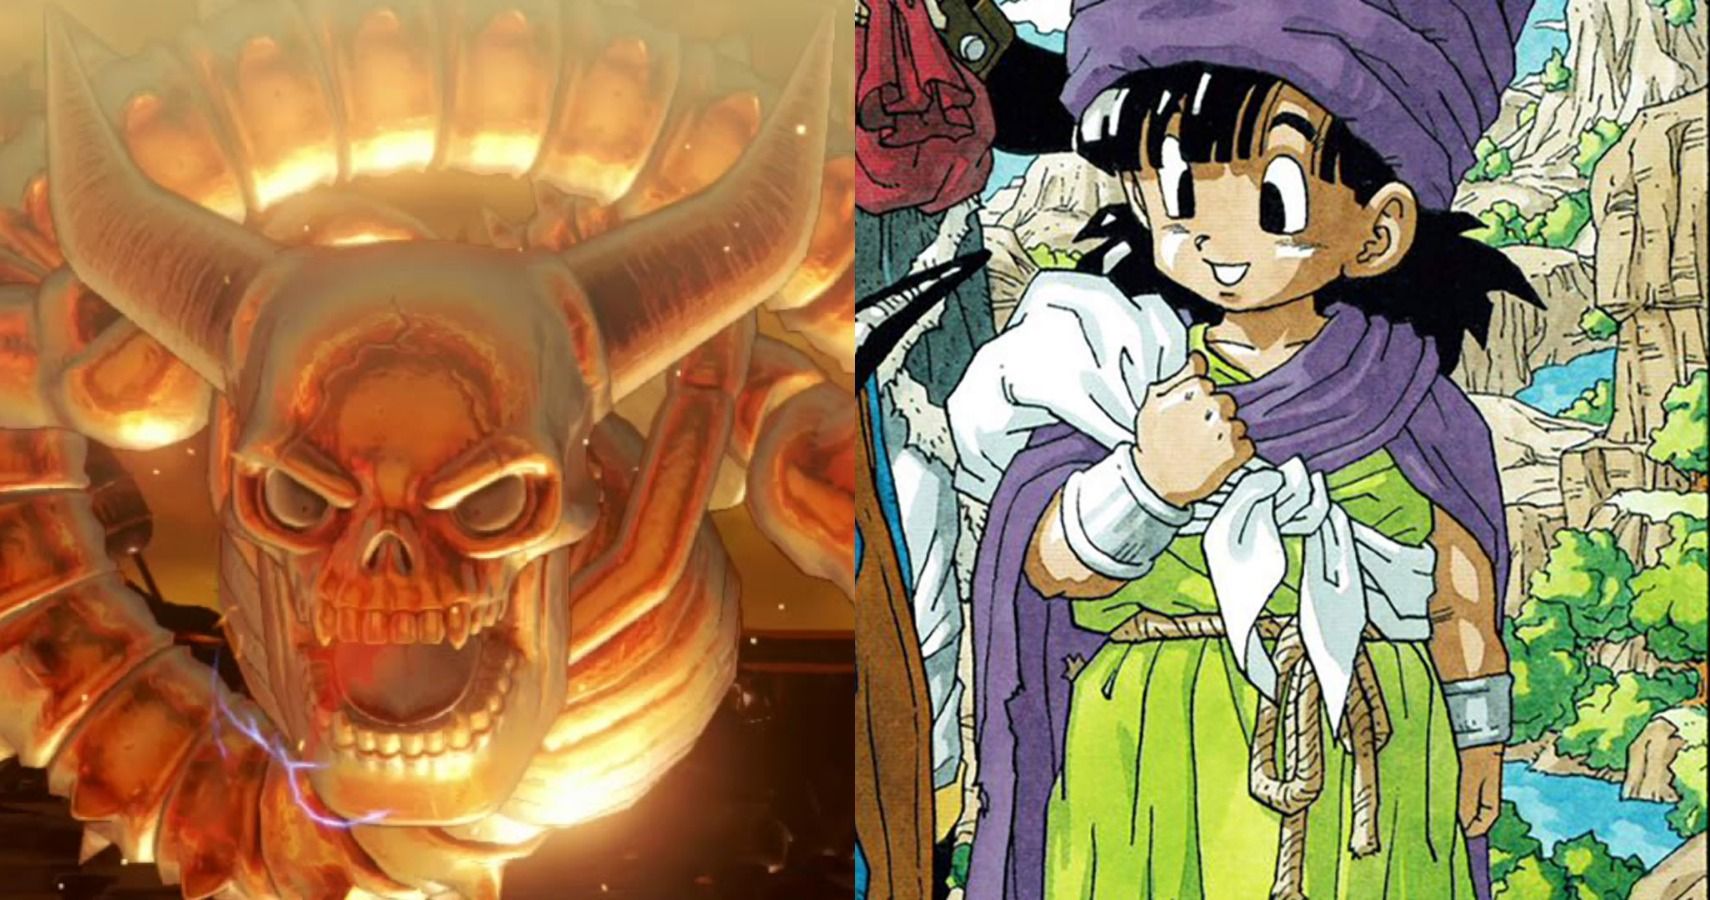 10 Dragon Quest Monsters That Make Great D&D Bosses